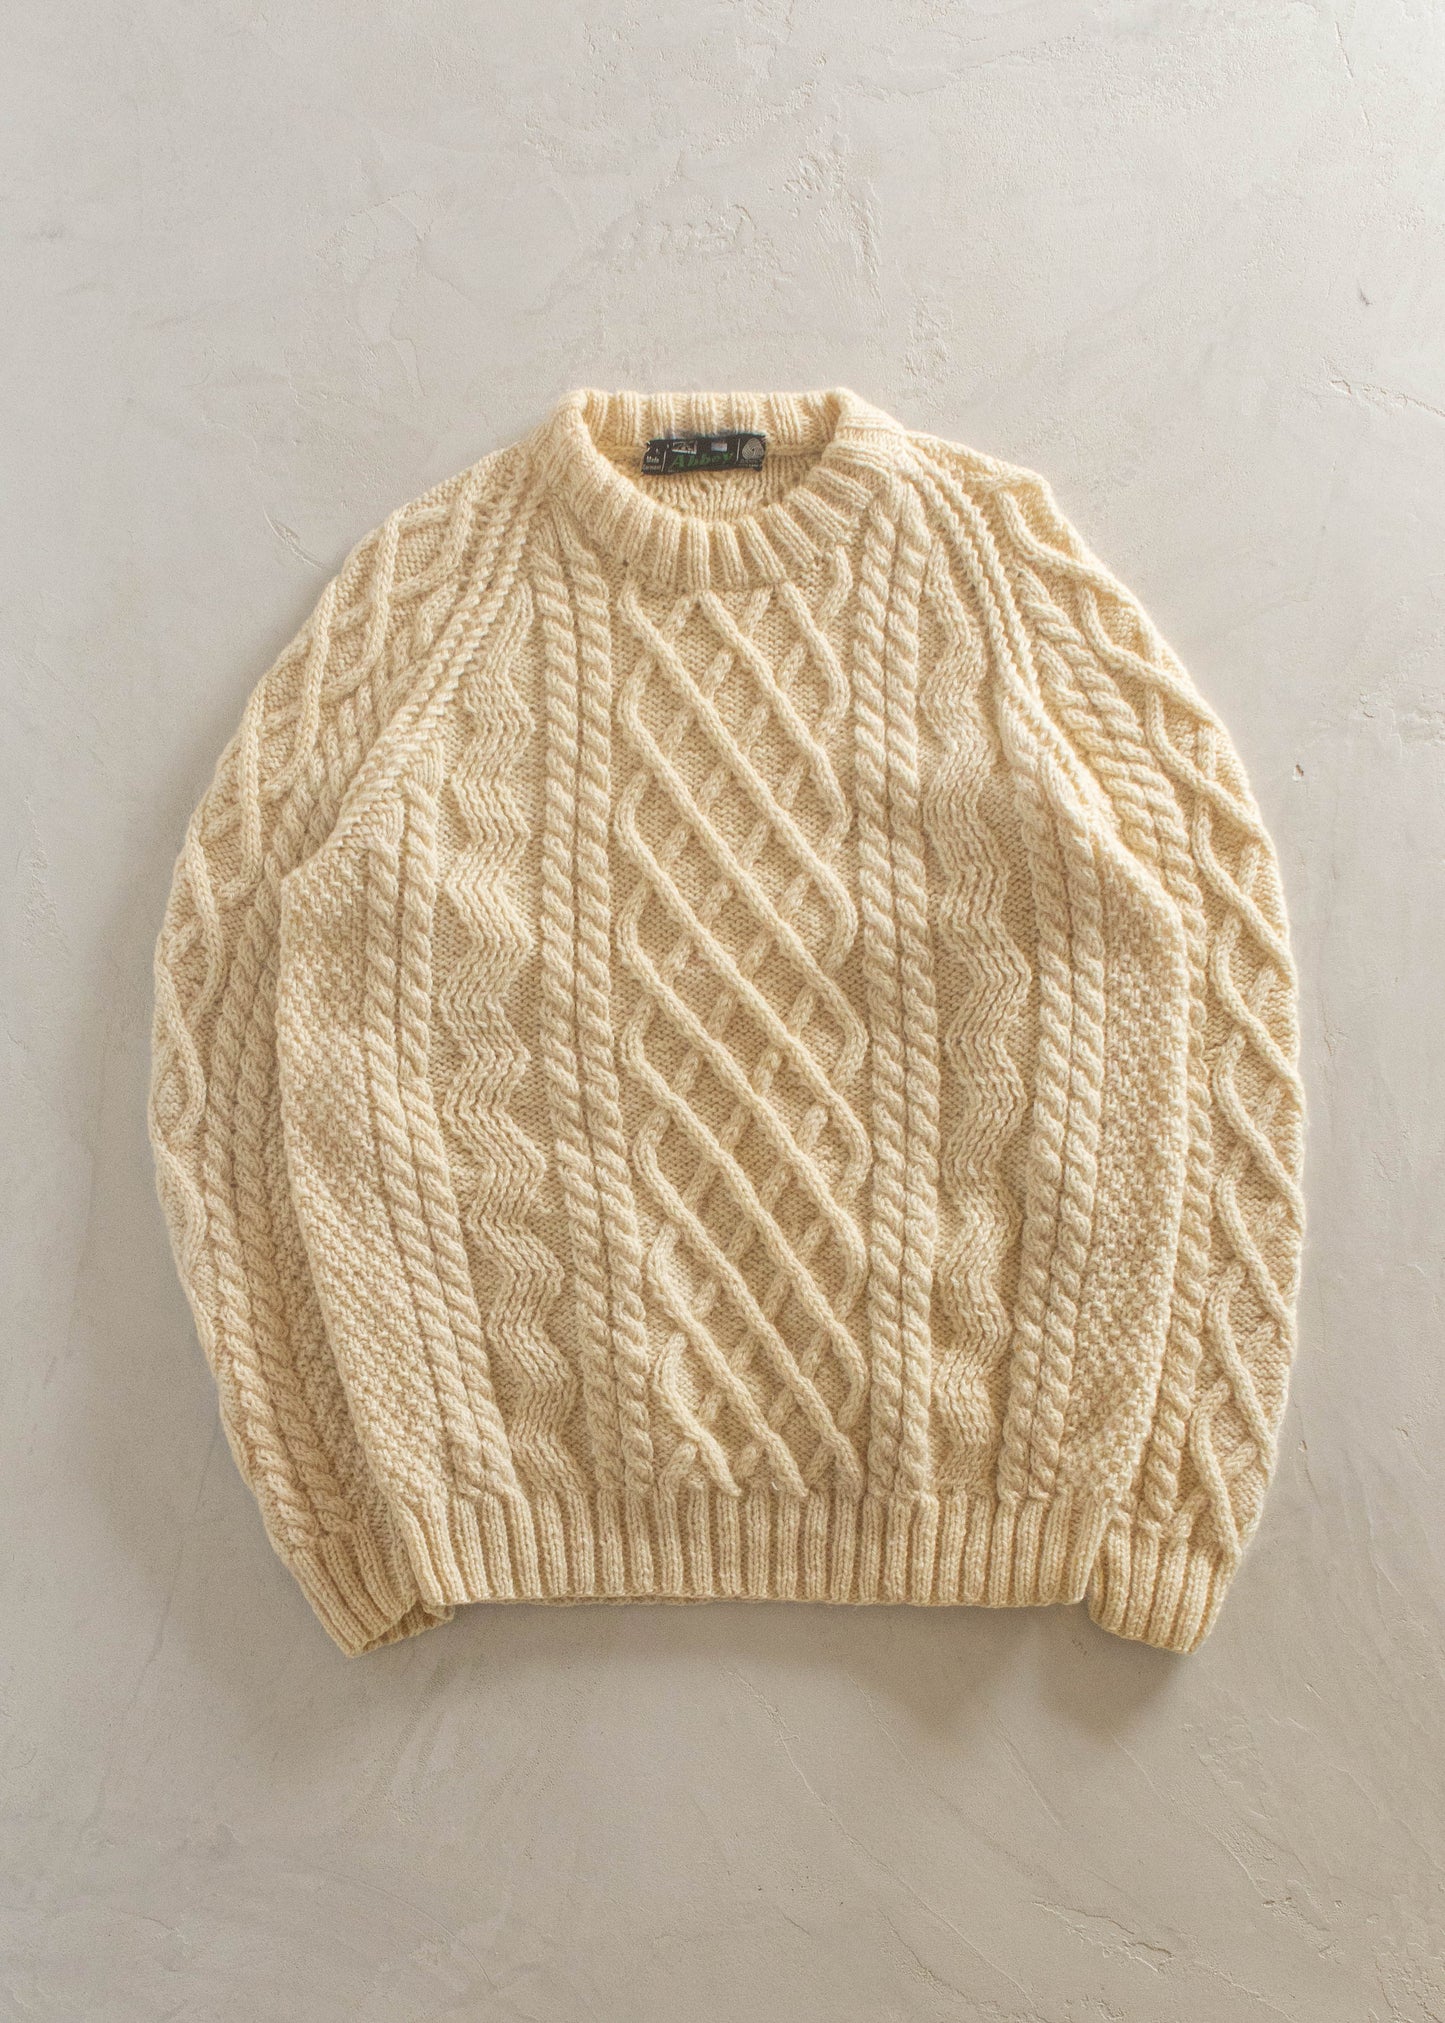 1980s Abbey Knitwear Cable Knit Wool Fisherman Sweater Size M/L